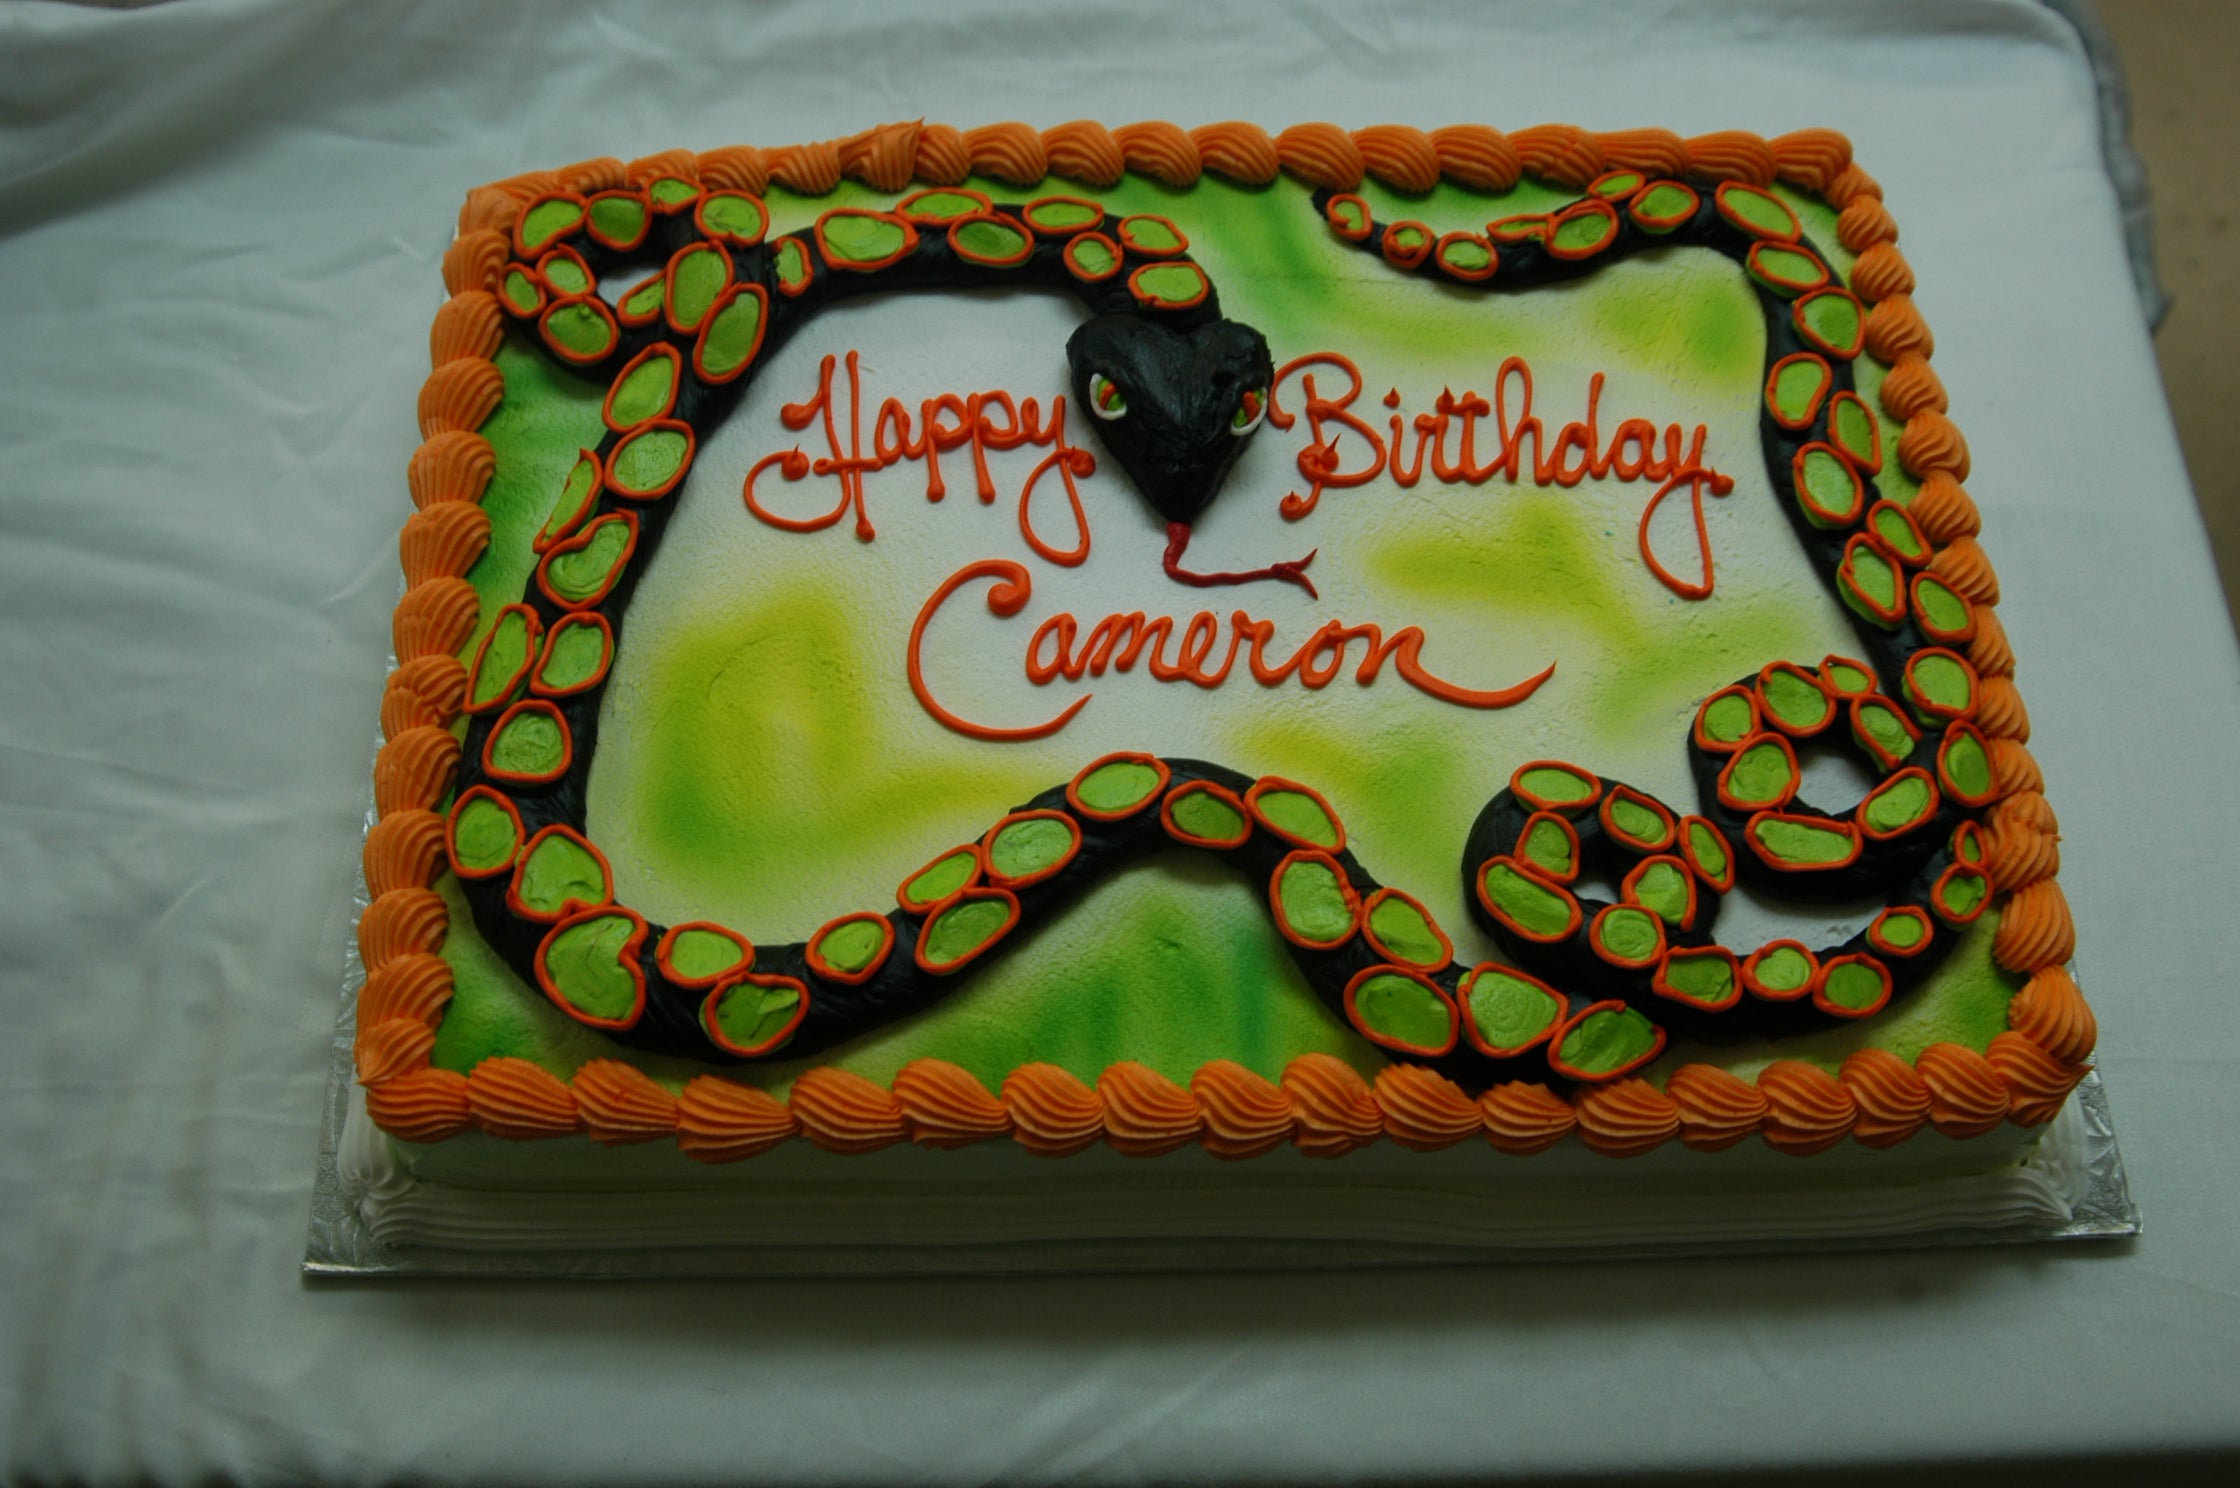 McArthur's Bakery Custom Cake with Black, Green and Orange Snake